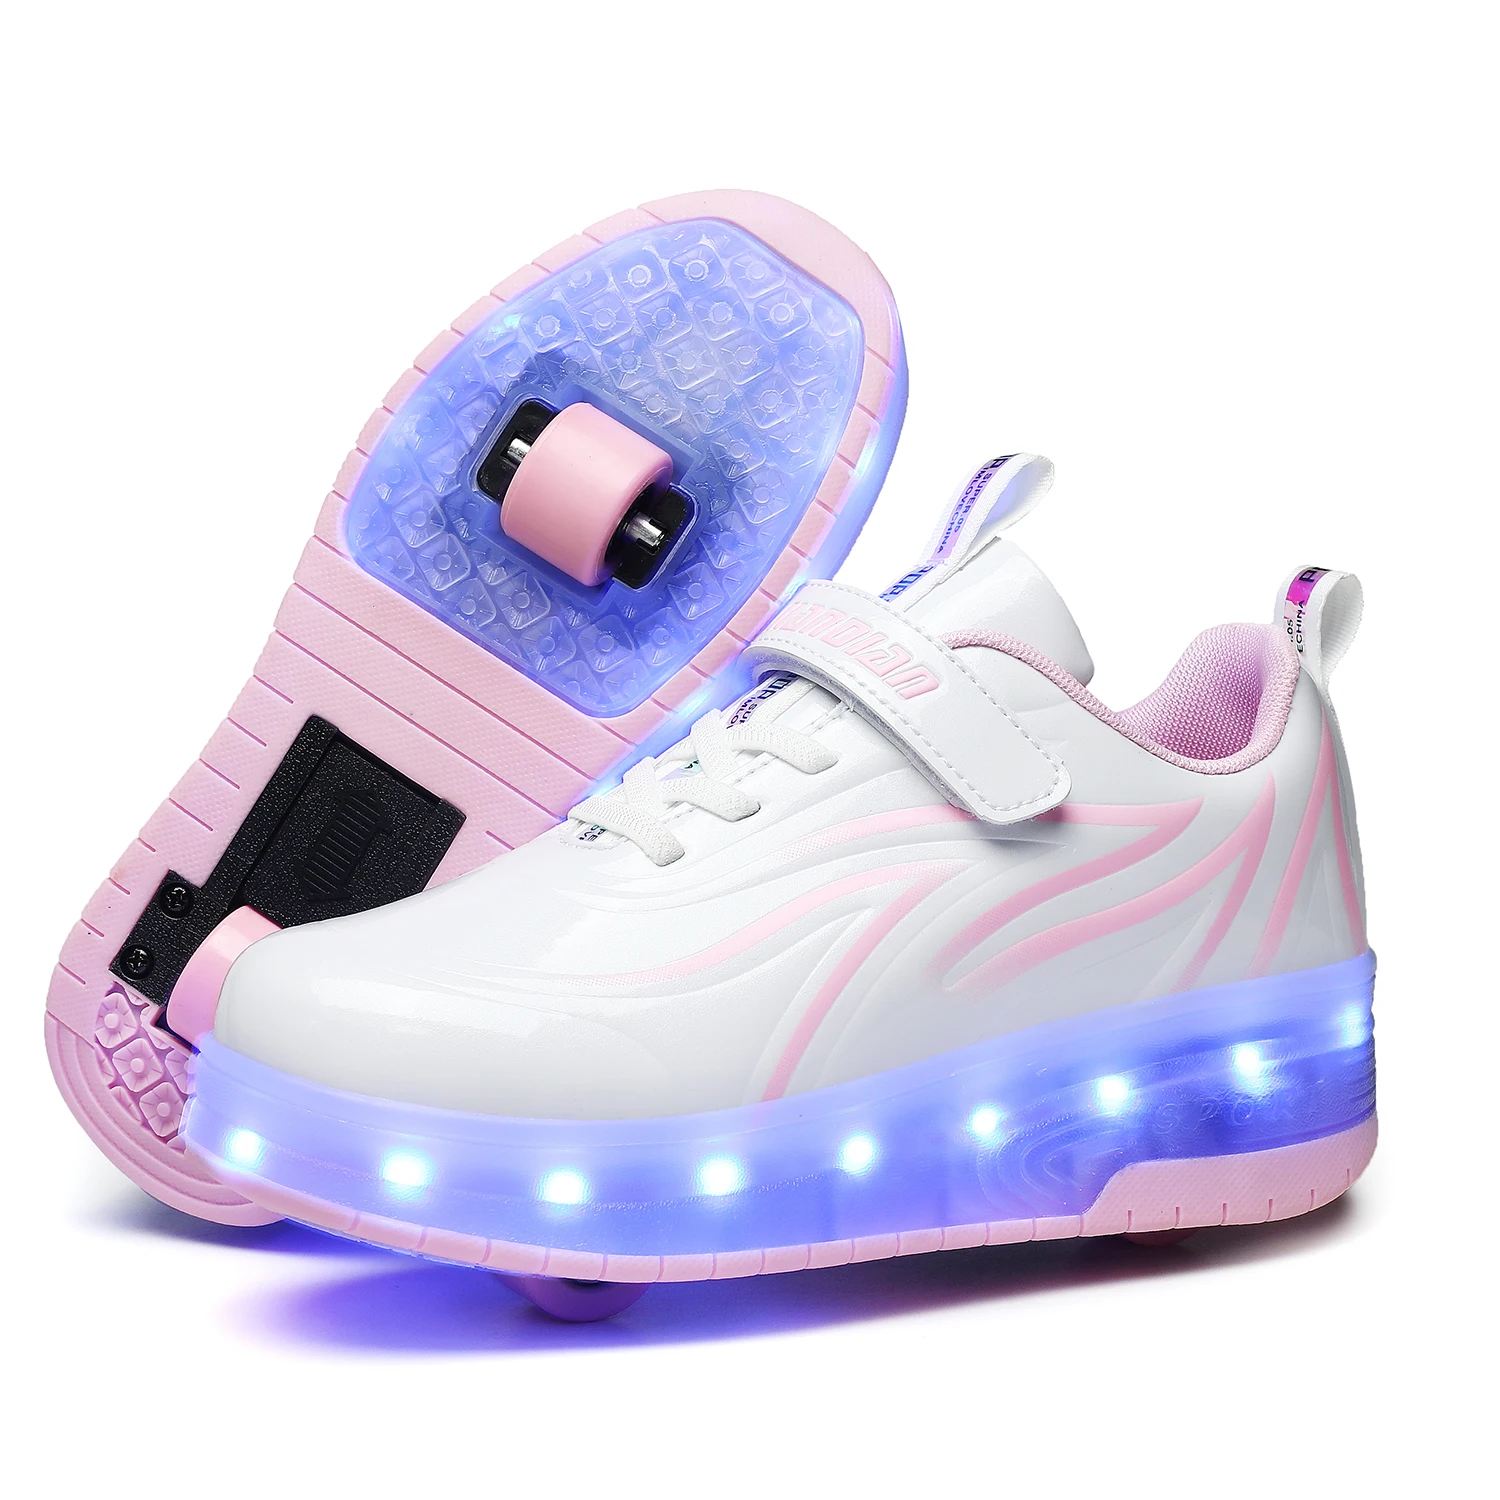 

Kids Roller Skate Shoes For Girls Boys Retractable Kick Roller Shoes Double wheels LED Light USB charging skate roller shoes